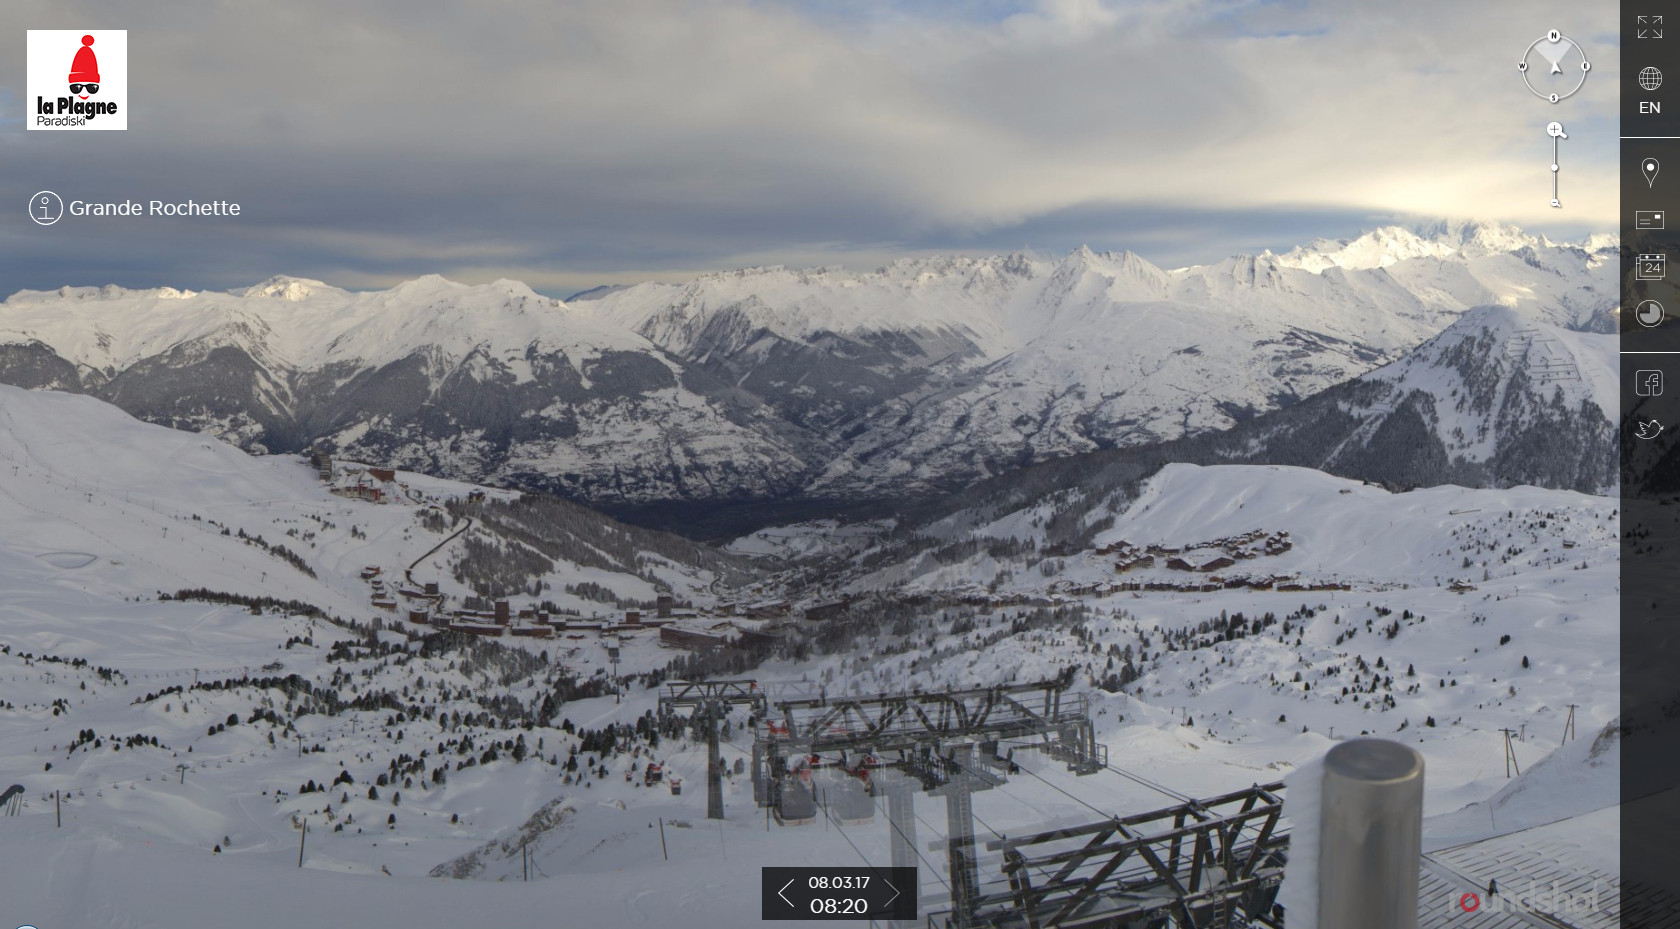 Ski resort, La Plagne, Alps